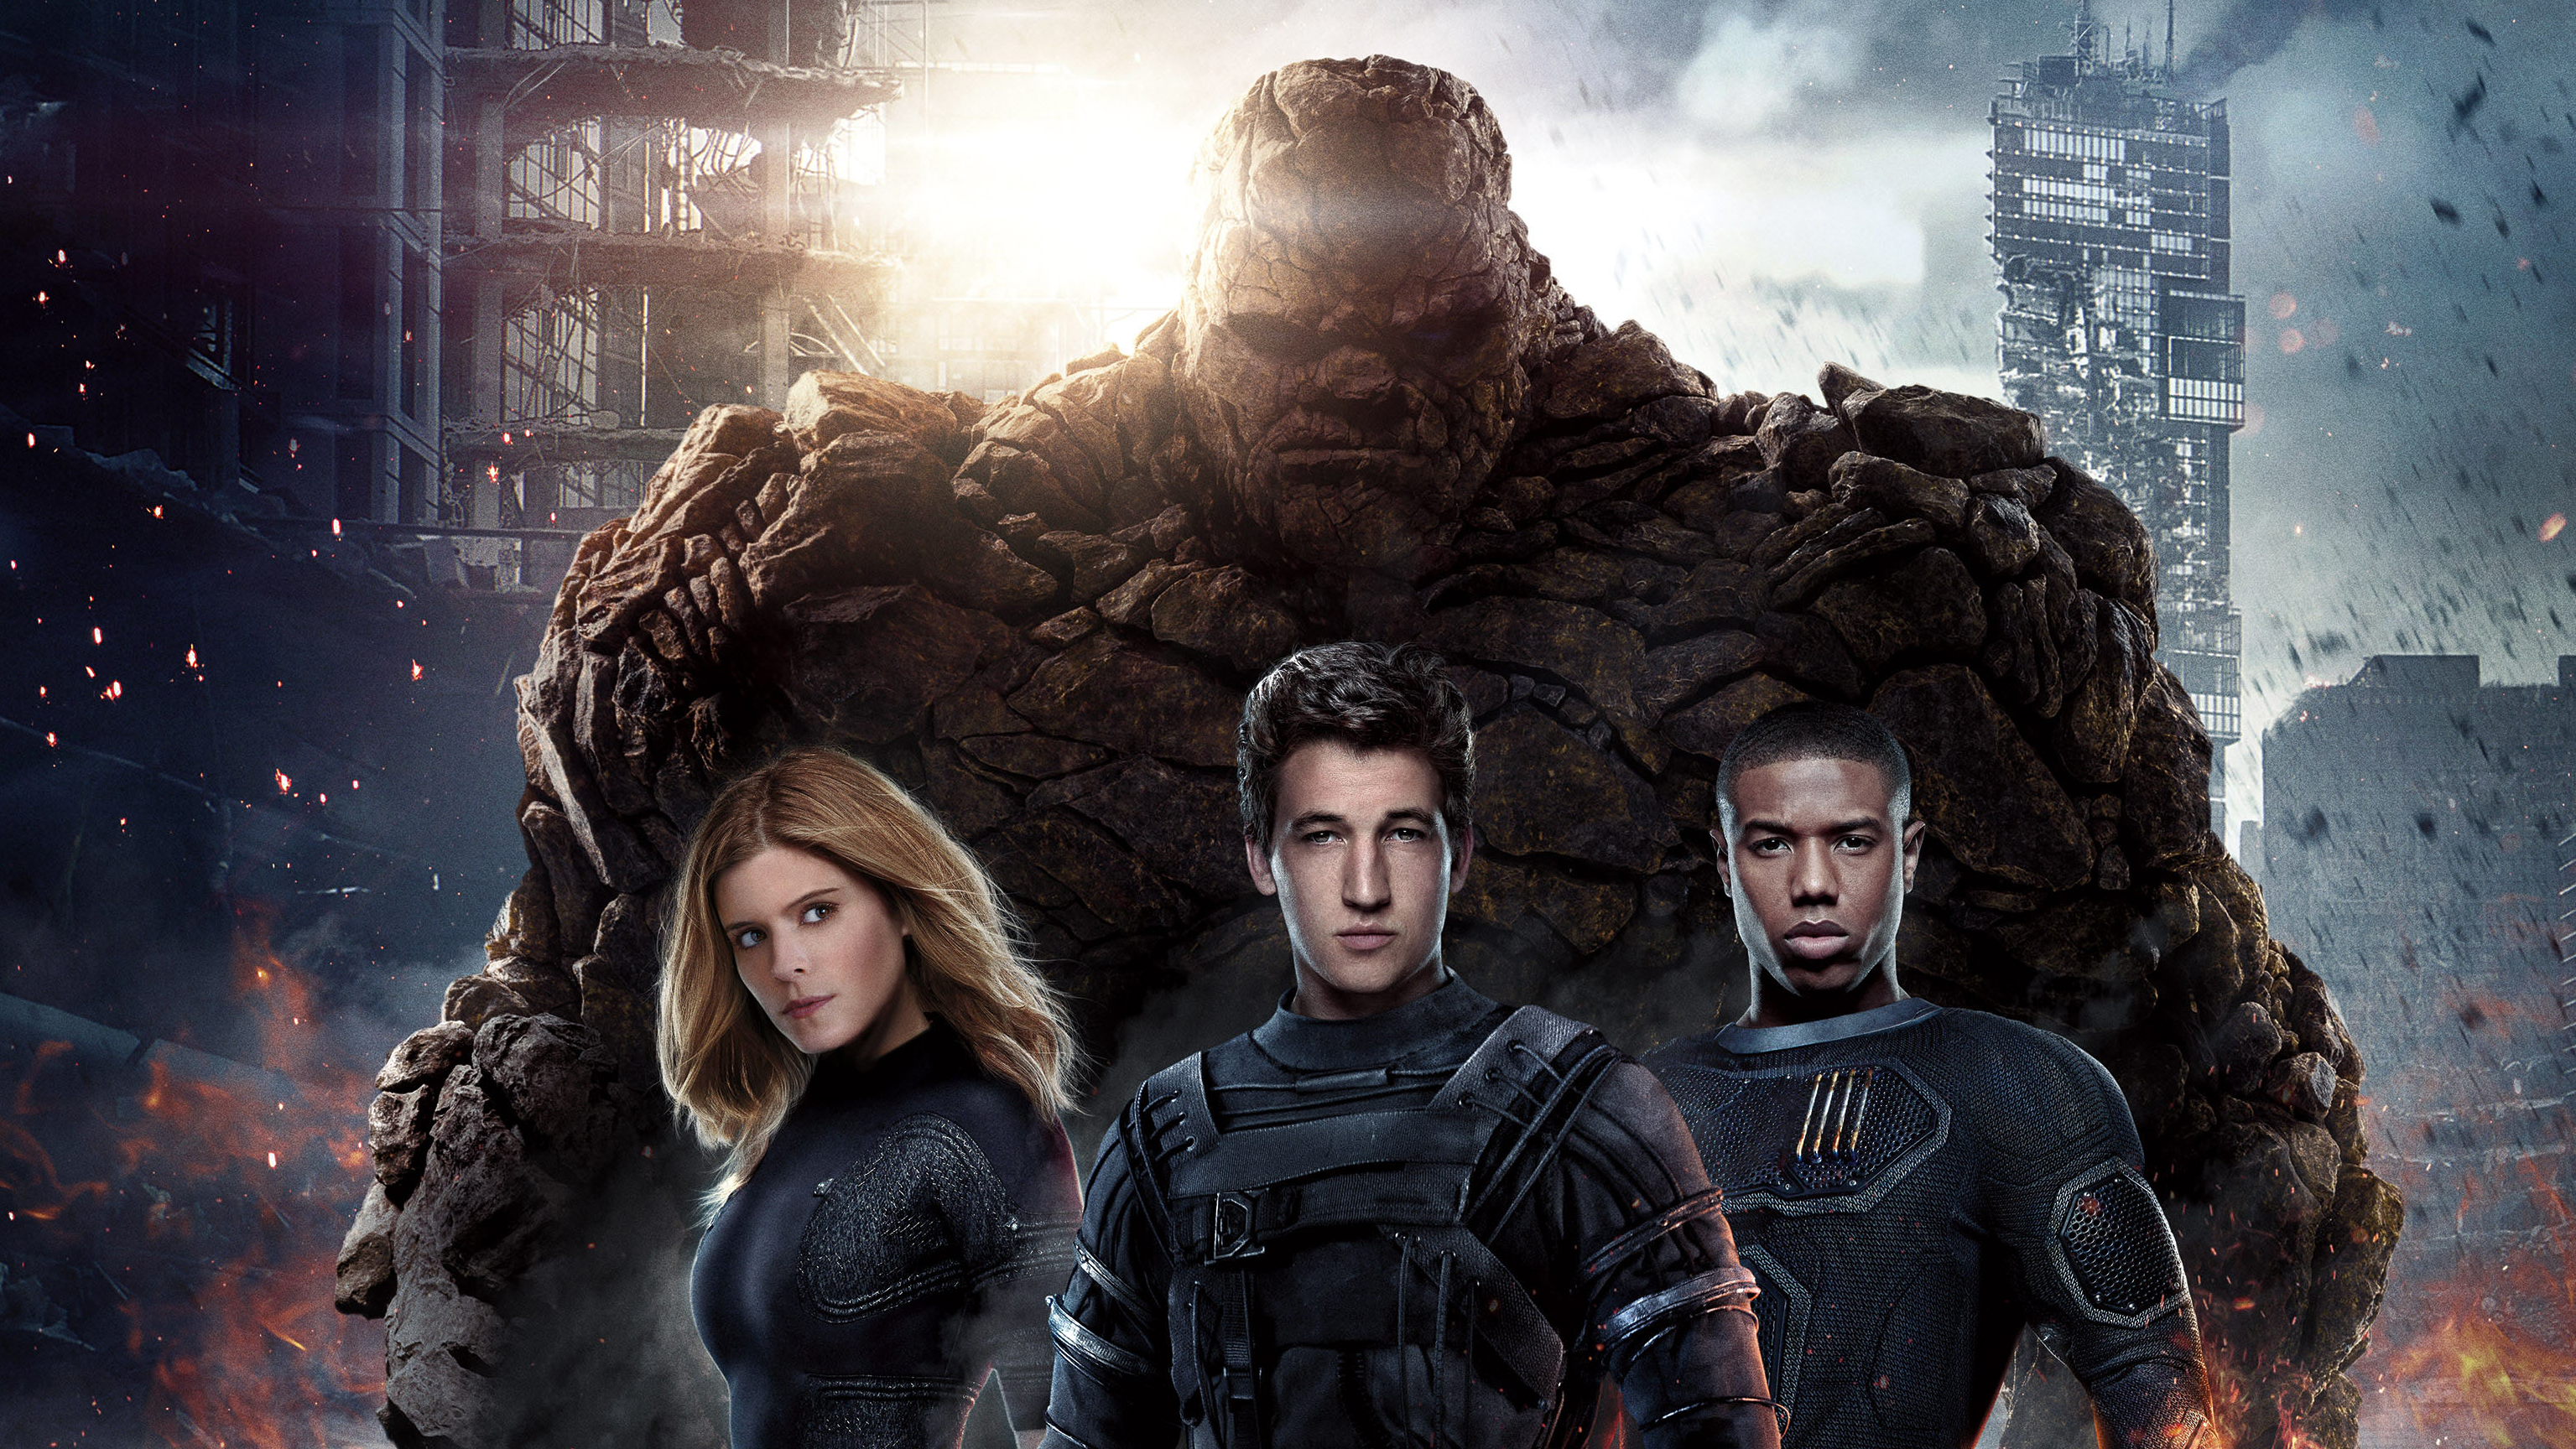 Fantastic Four' Director Says Black Sue Storm Got 'Heavy Pushback'